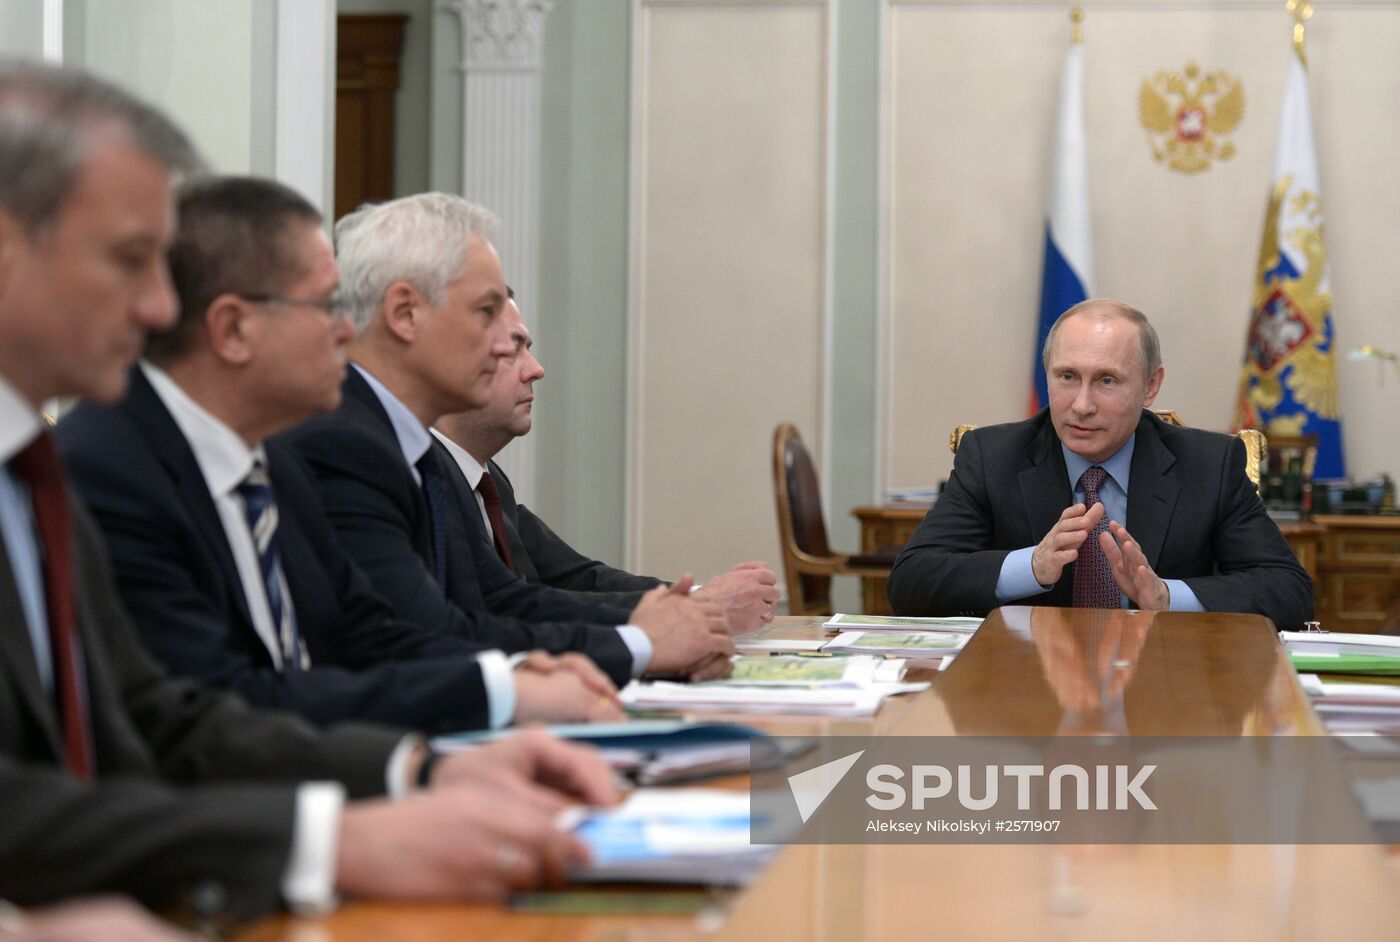 President Putin meets with economic experts